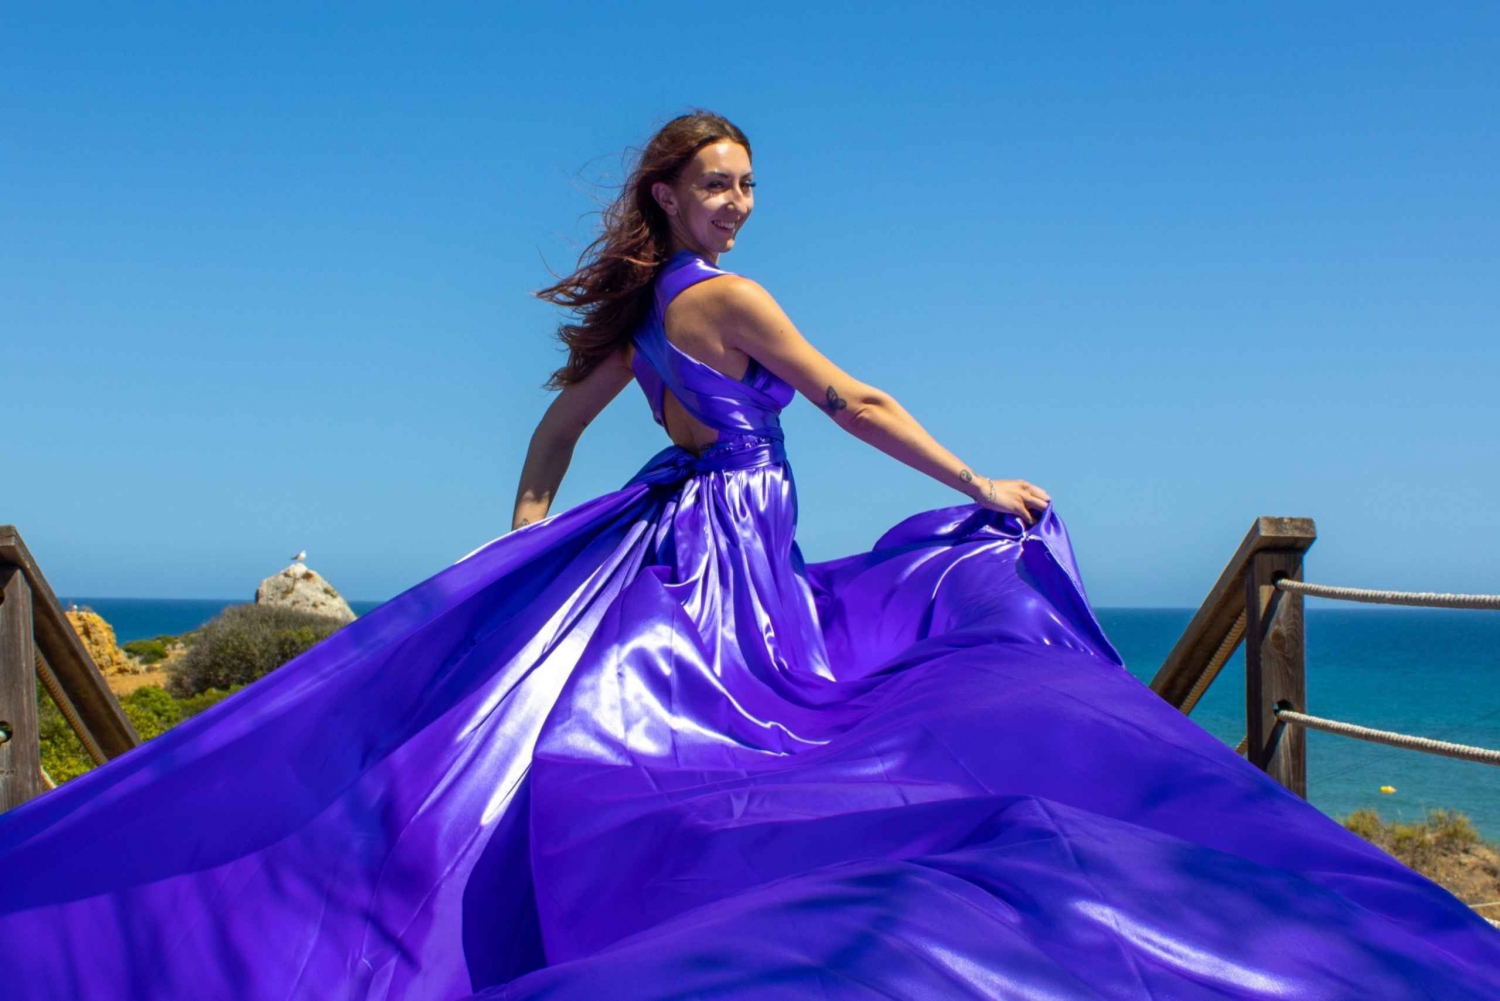 Flying Dress Algarve Experience